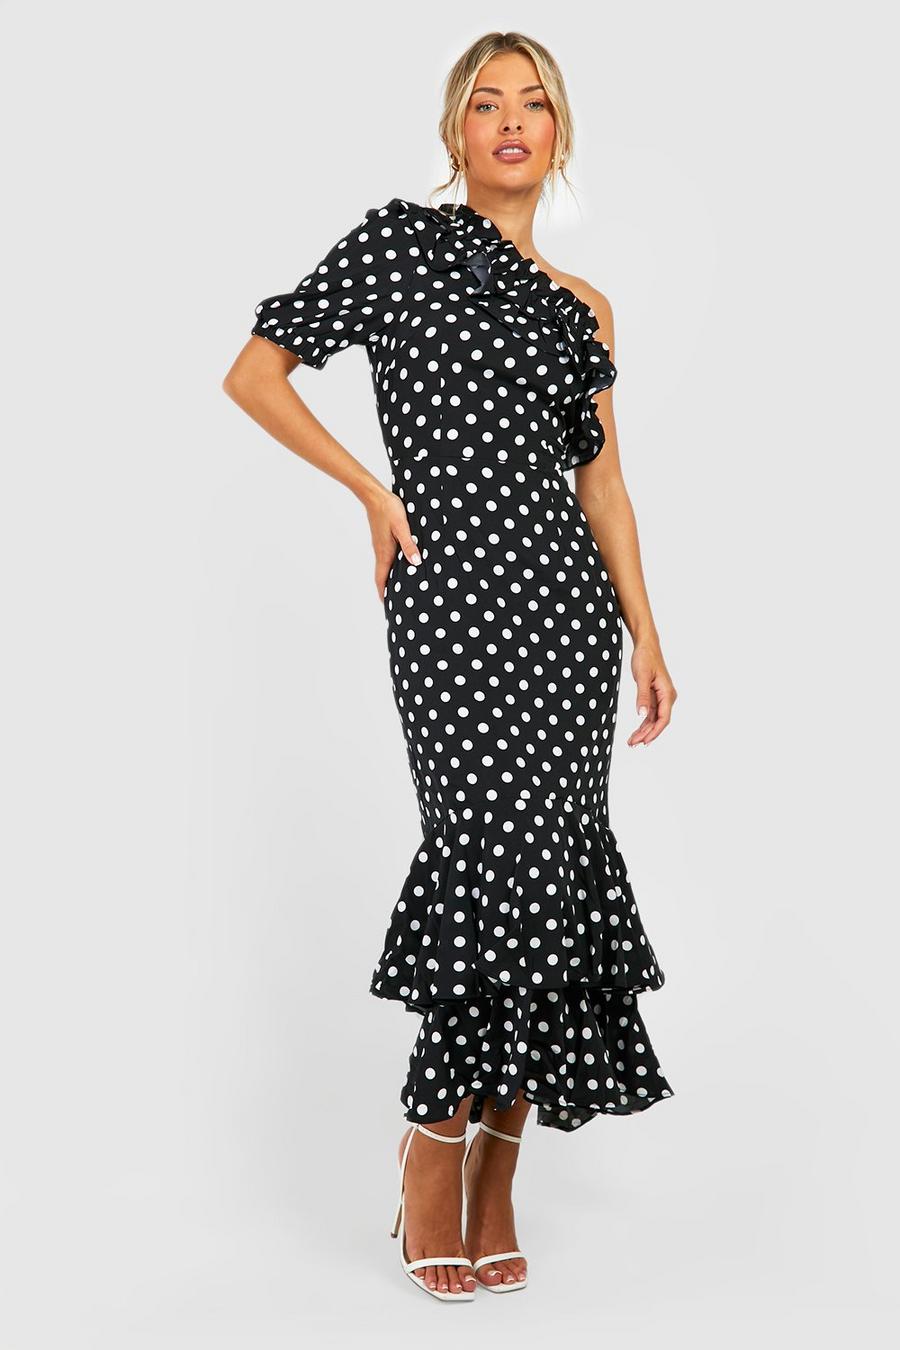 Black Polka Dot Ruffle Midaxi Dress image number 1